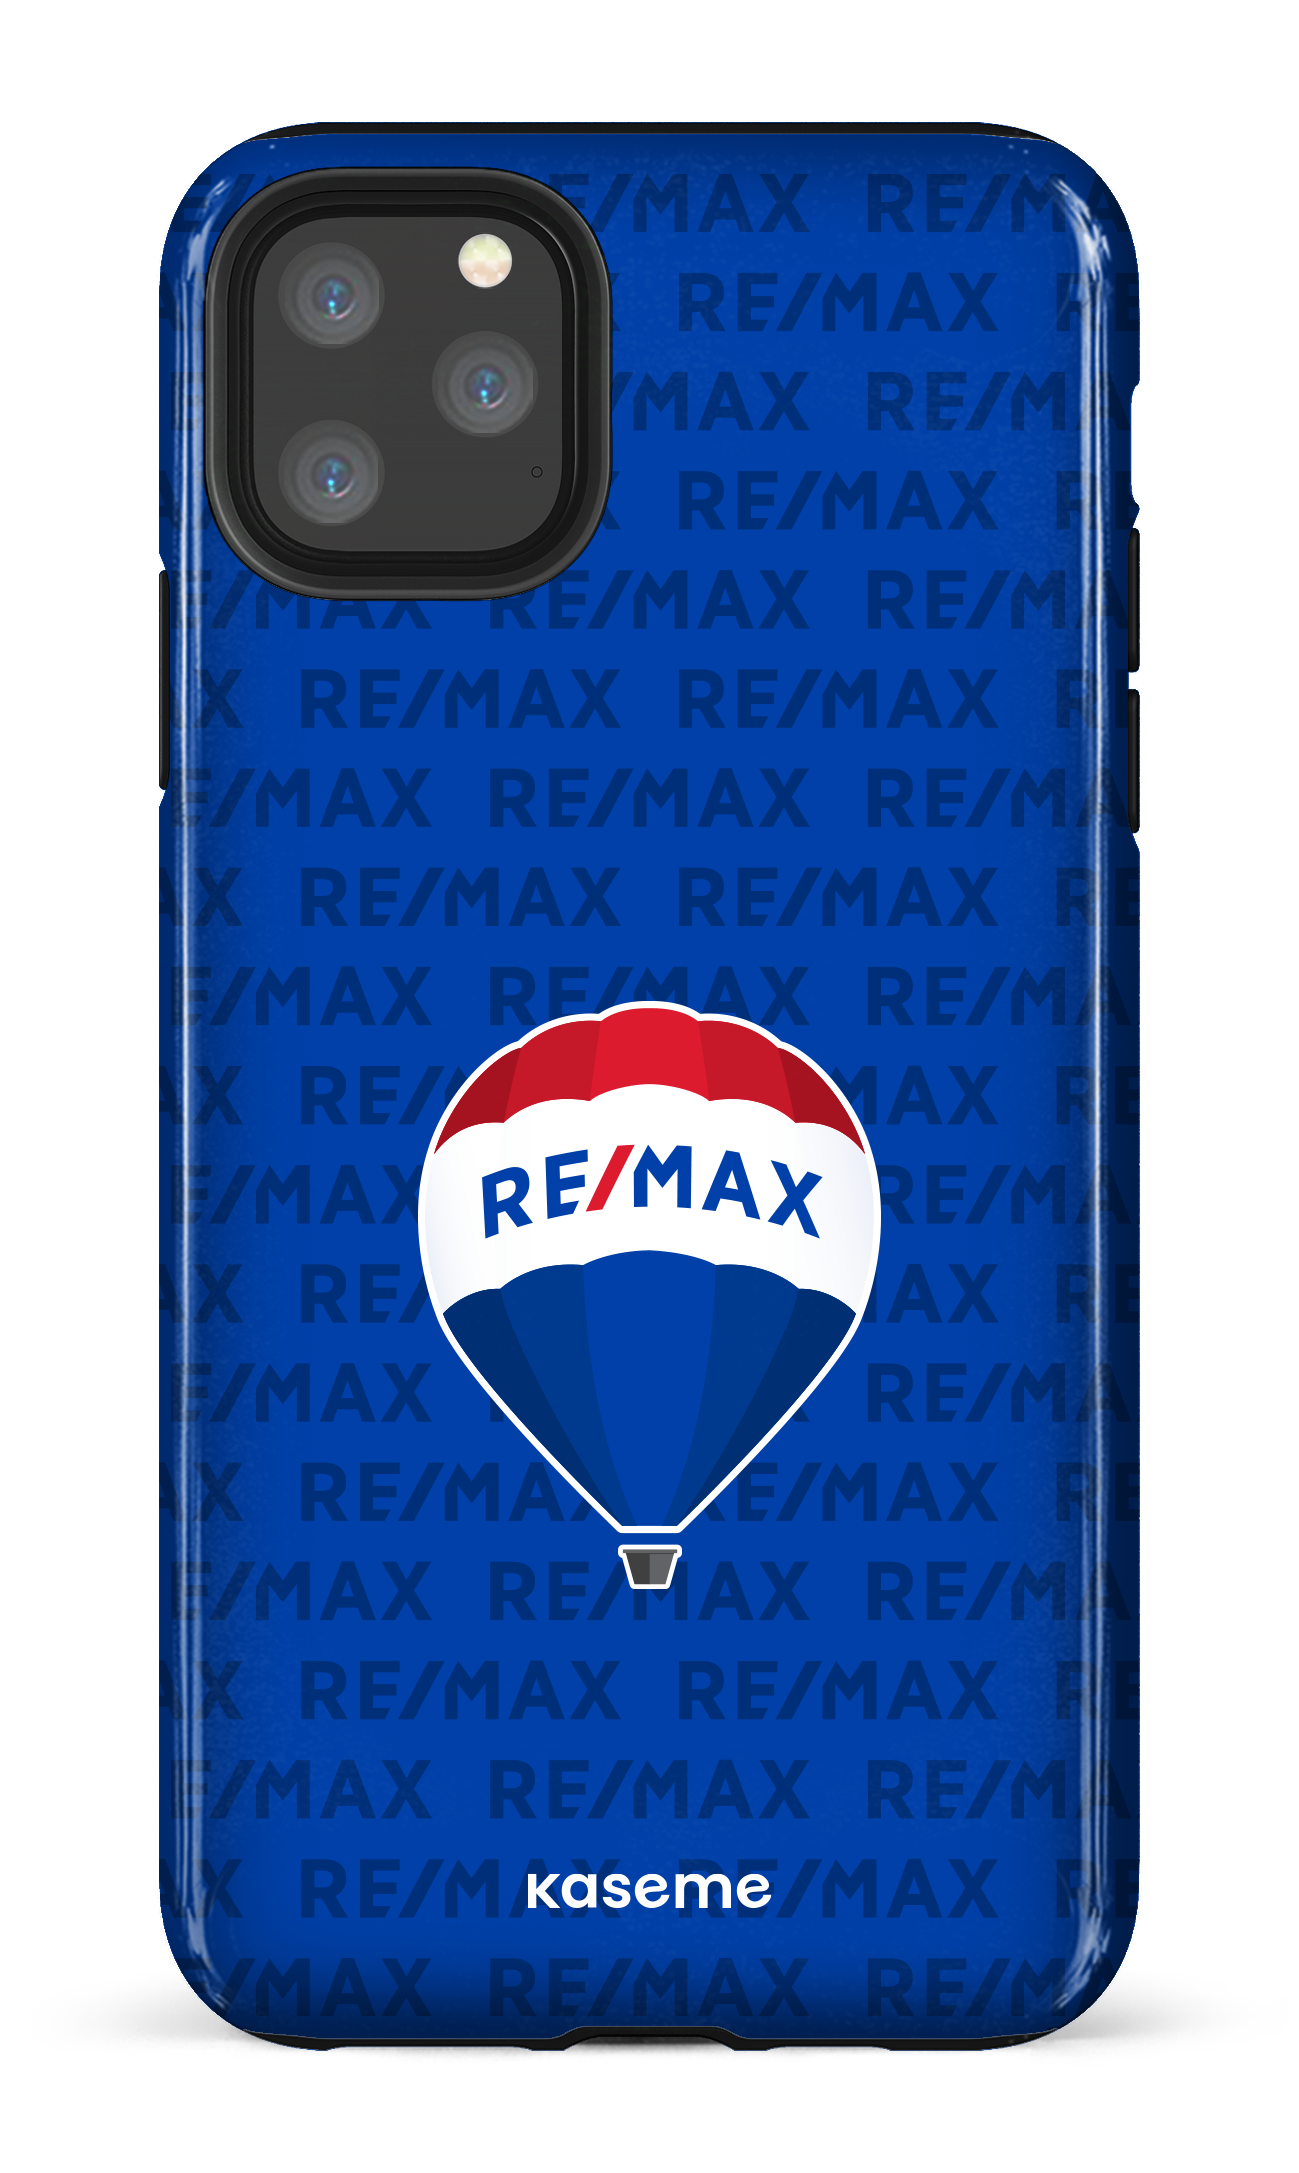 Remax pattern Bleu - iPhone 11 Pro Max